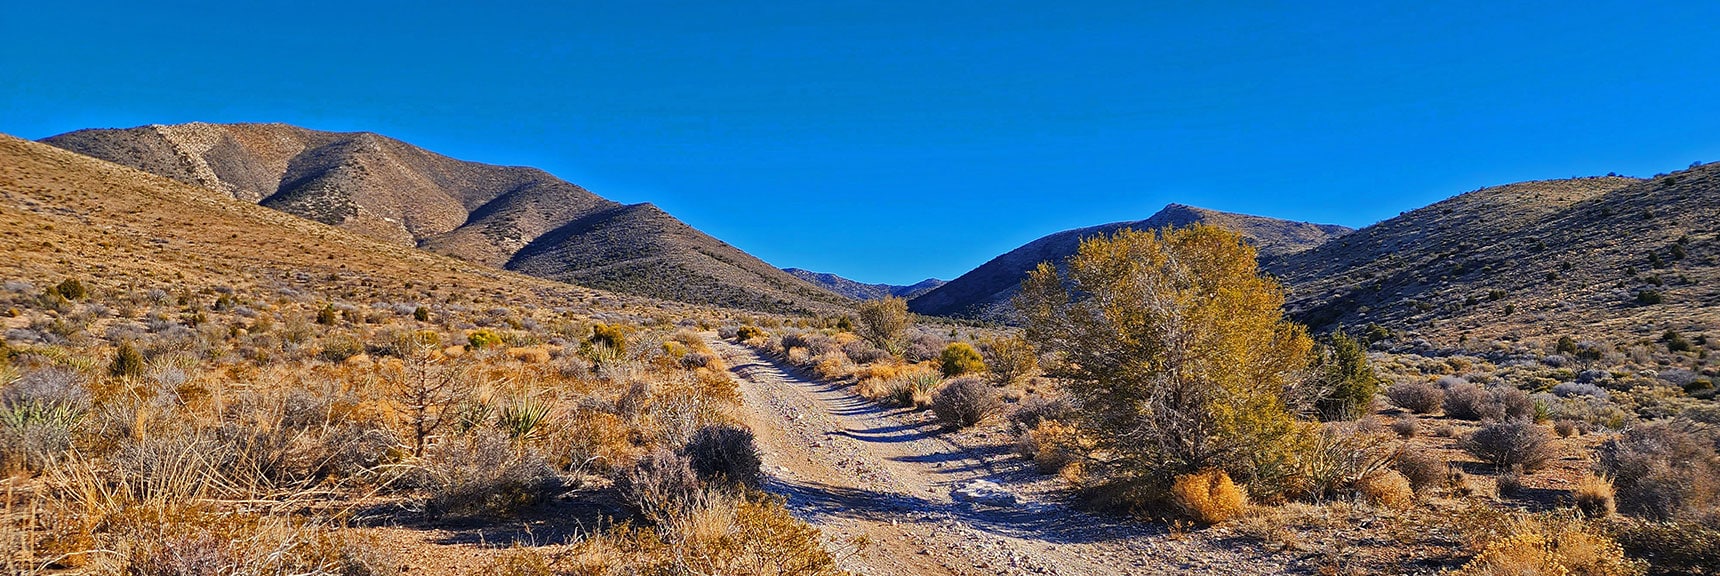 Salt Grass Road is a Great Back Door Access to Mt. Wilson's Summit | Lovell Canyon Roads, Nevada | David Smith | LasV3gasAreaTrails.com